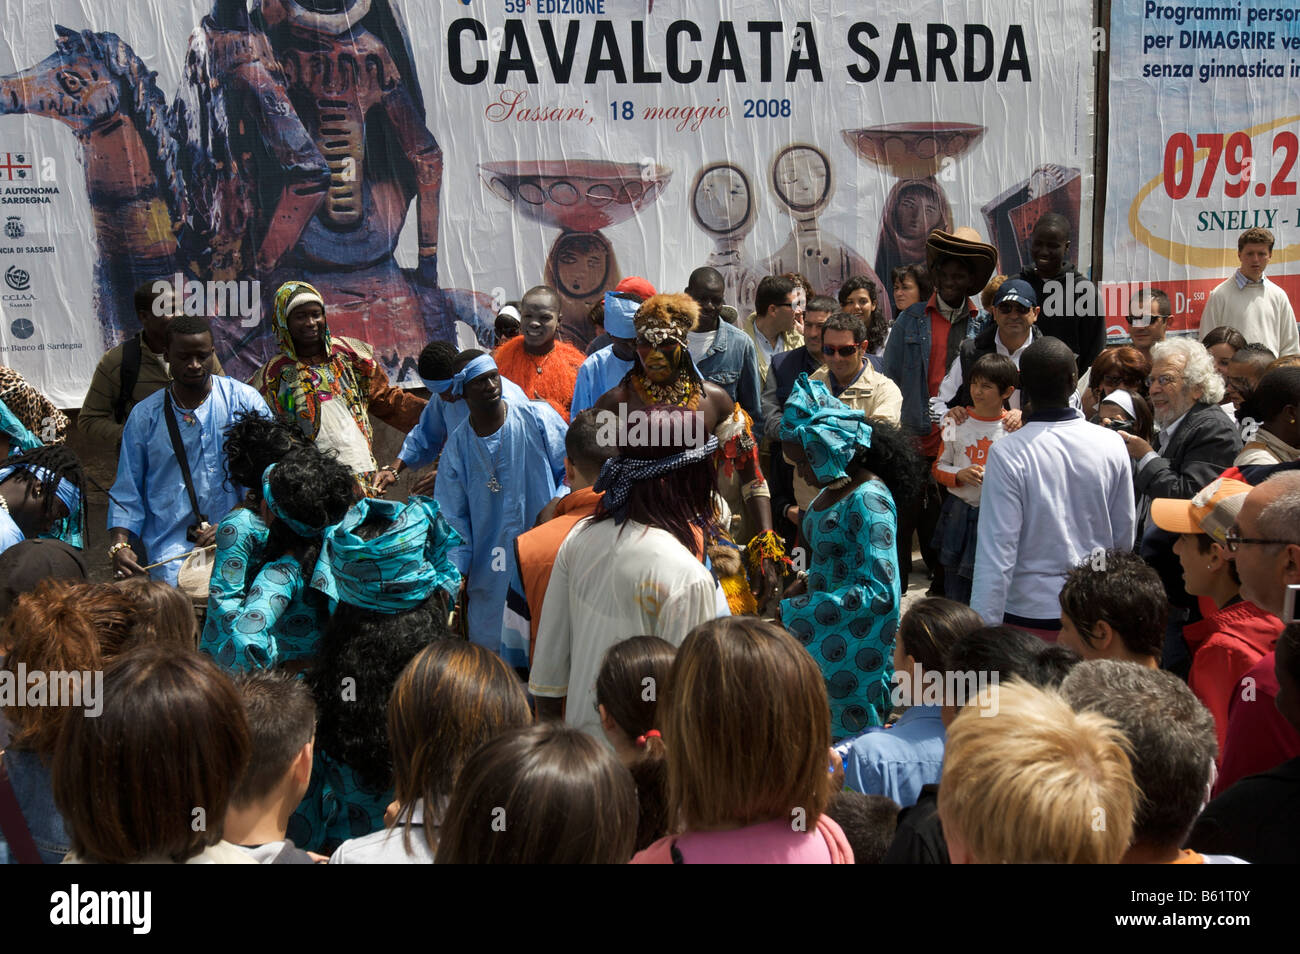 Cavalcata Sarda Festival in Sassari, Sardinia, Italy, Europe Stock Photo